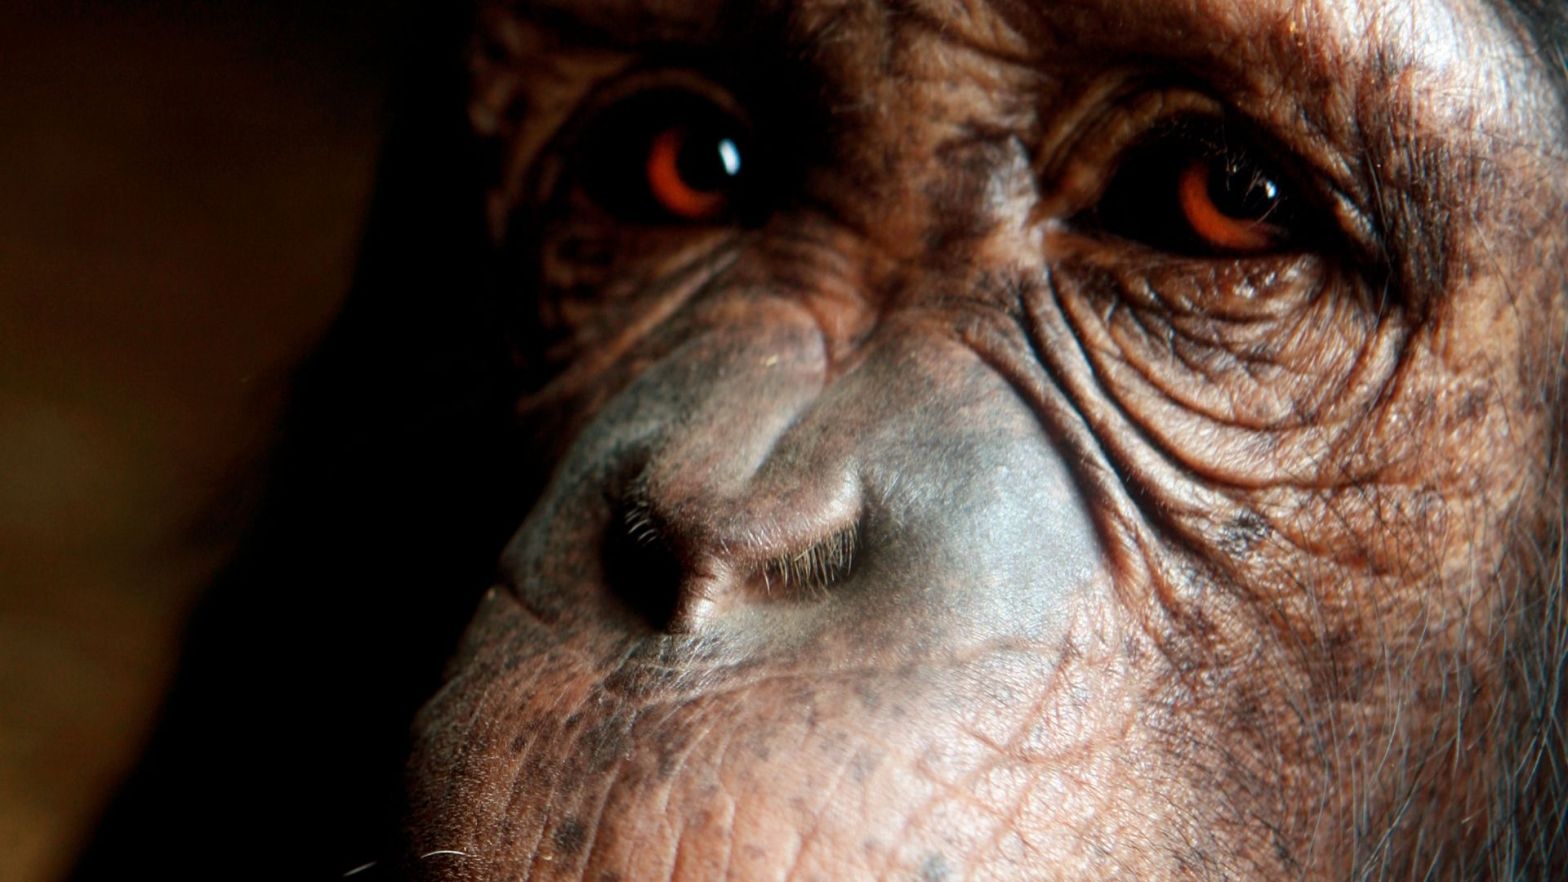 Chimpanzee - Pan Troglodytes - Africa, close-up of face